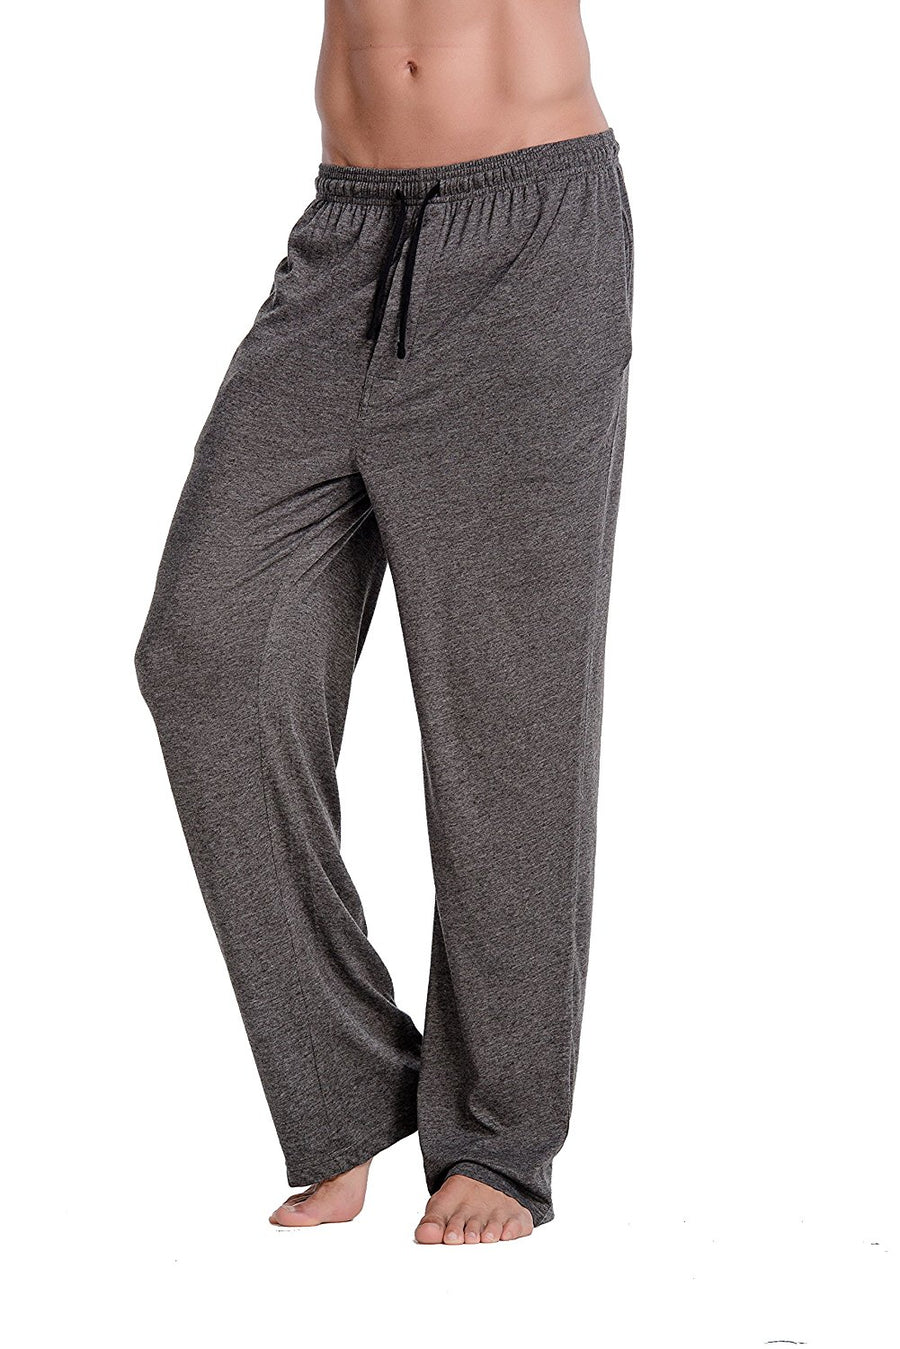 CYZ Men's 100% Cotton Jersey Knit Pajama Pants/Lounge Pants With 